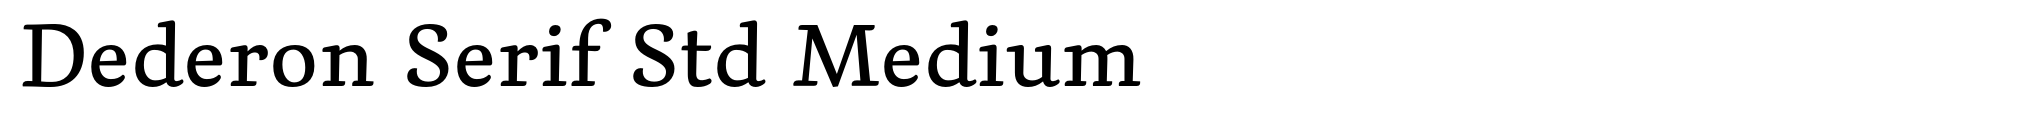 Dederon Serif Std Medium image